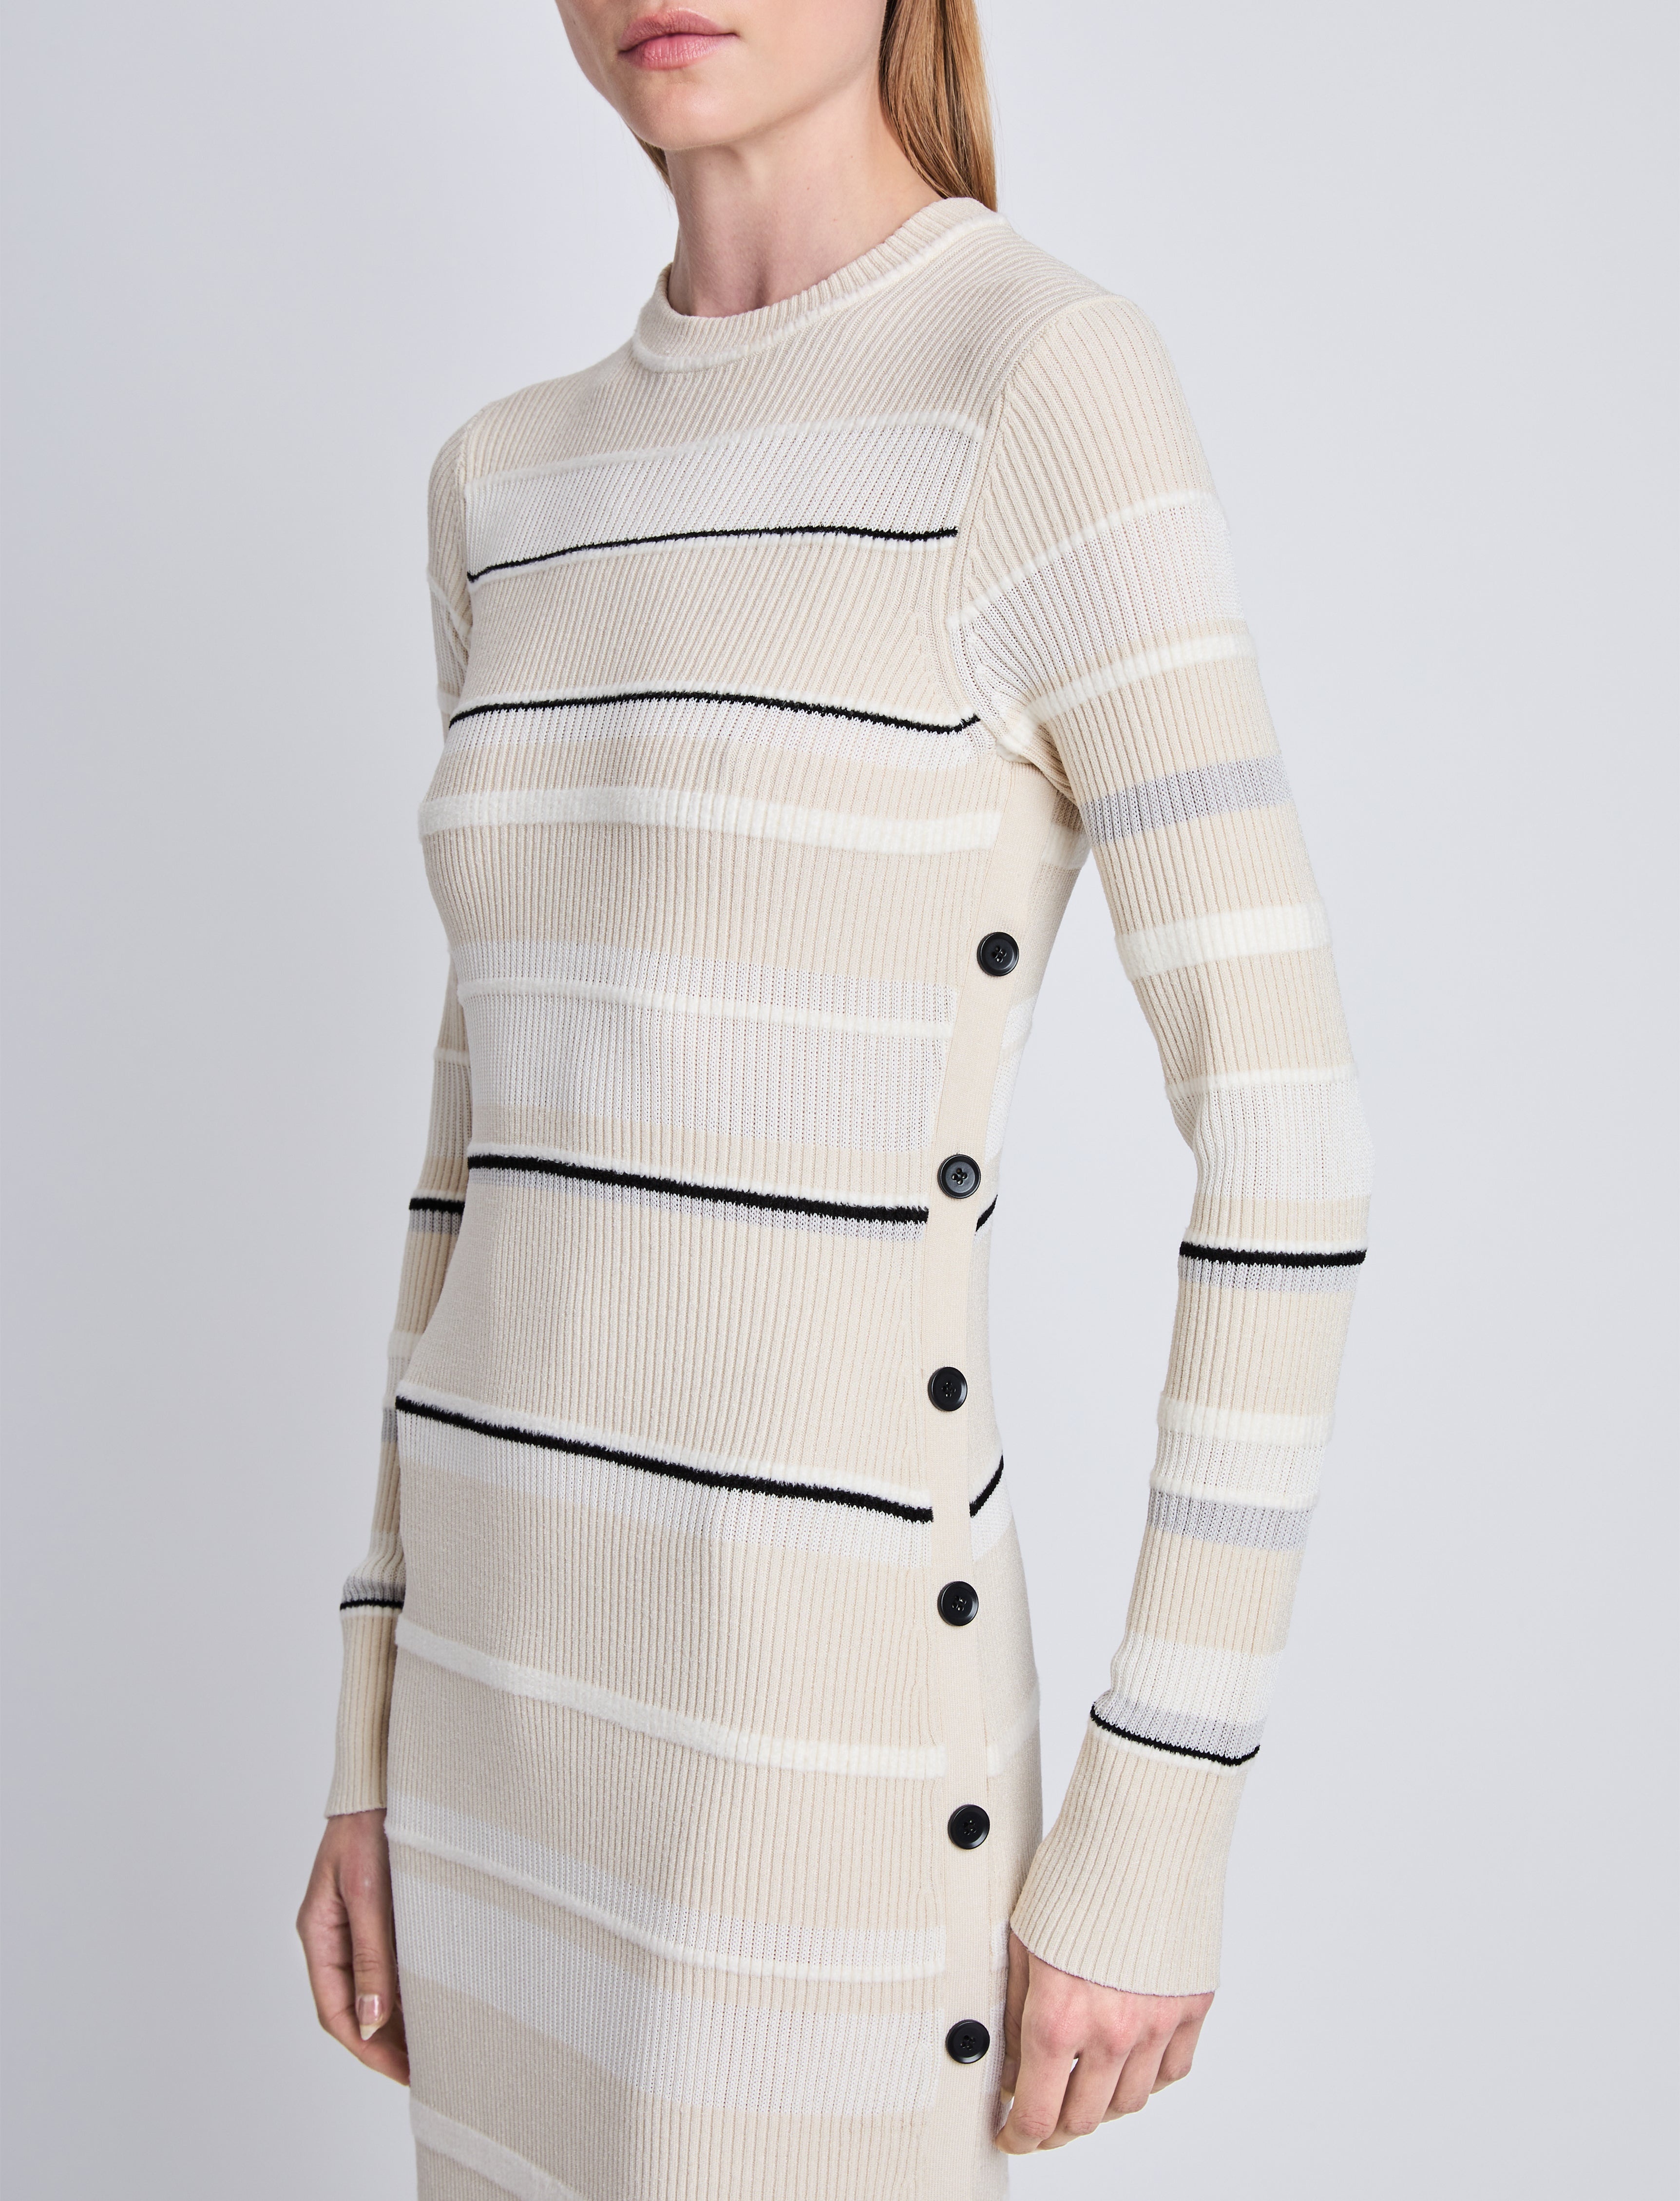 Rachel Dress in Textured Striped Knit - 5